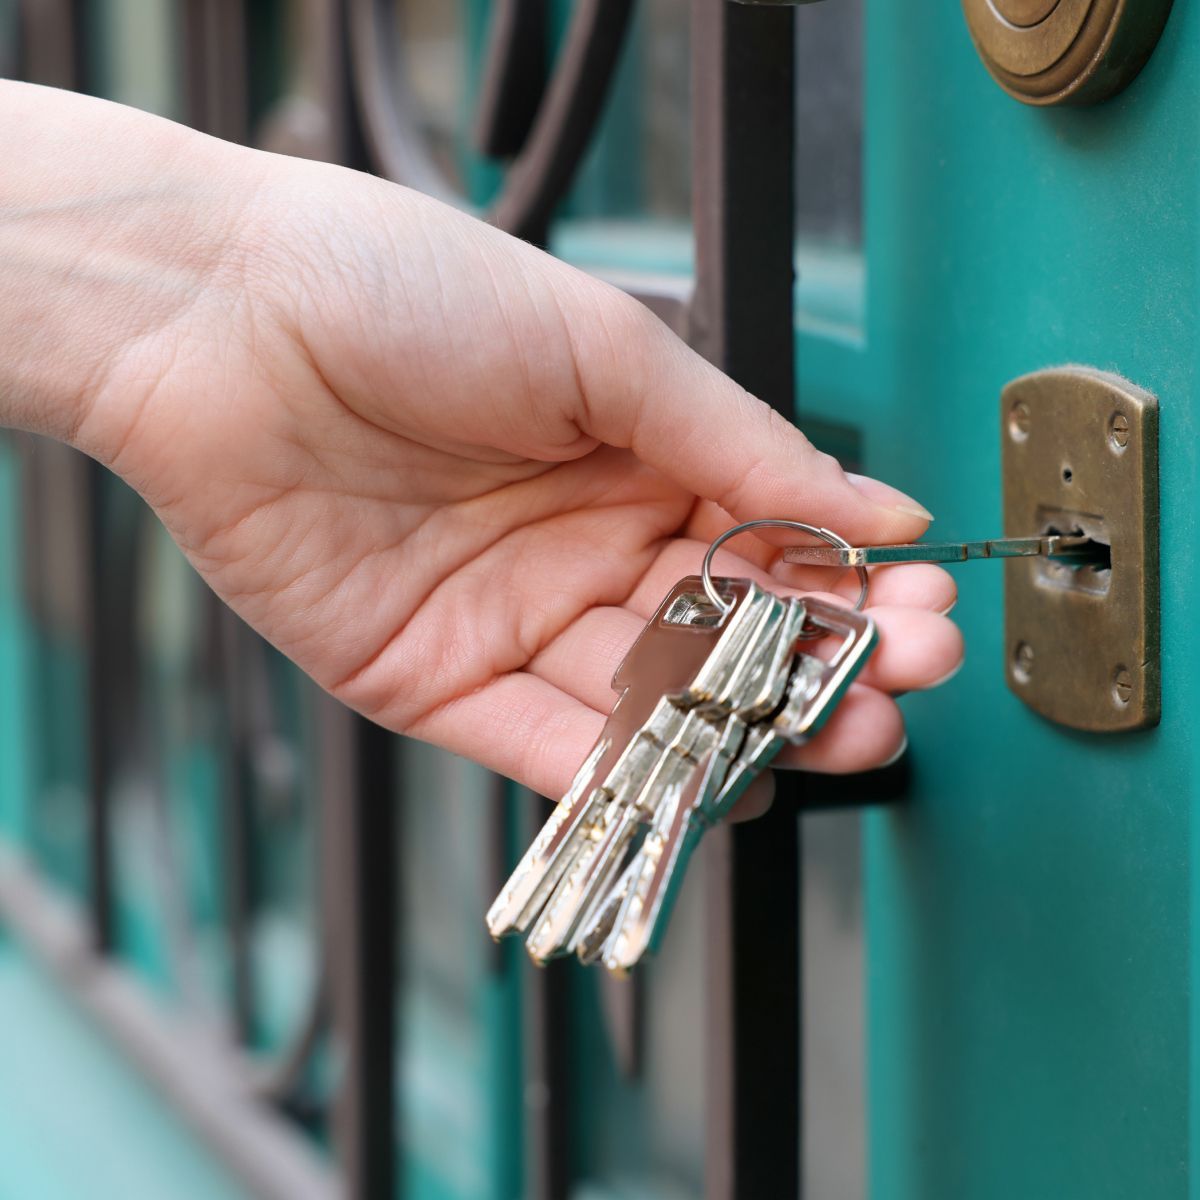 Hand holding keys and unlocking door